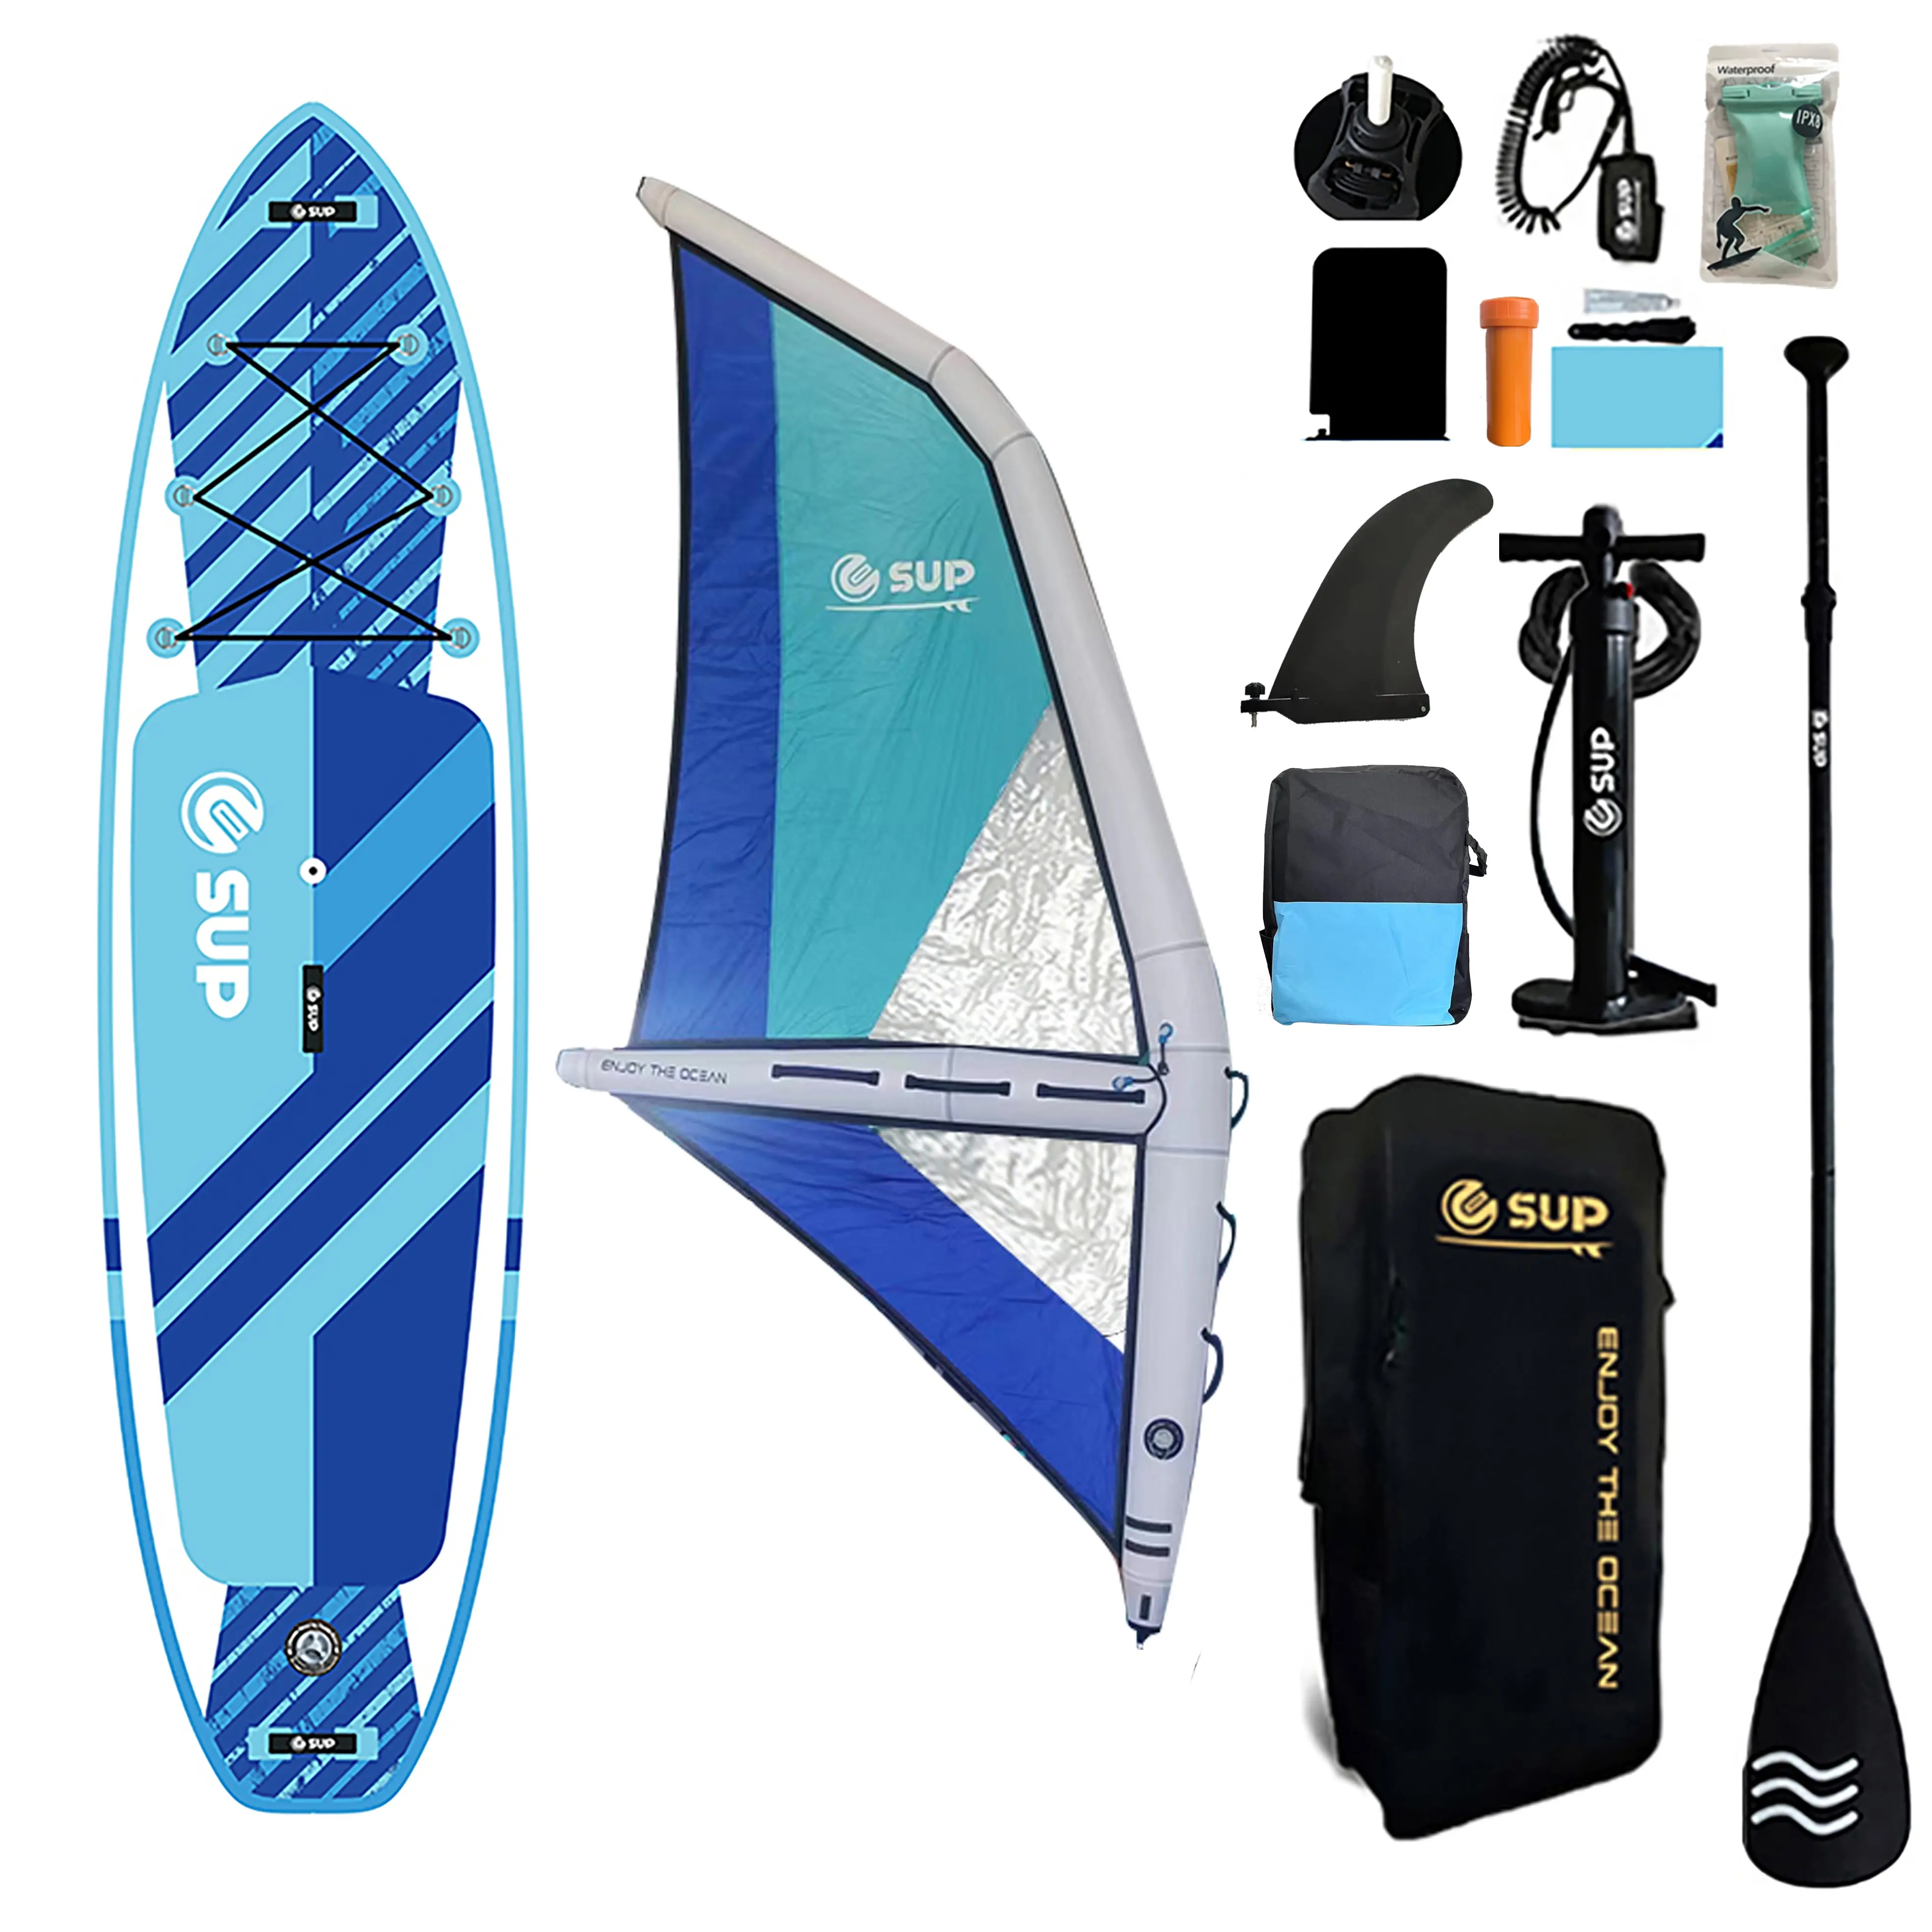 E SUP Hard Sup Stand Up vela inflable viento surf paddle surf Tabla de windsurf inflable windsurf vela de windsurf